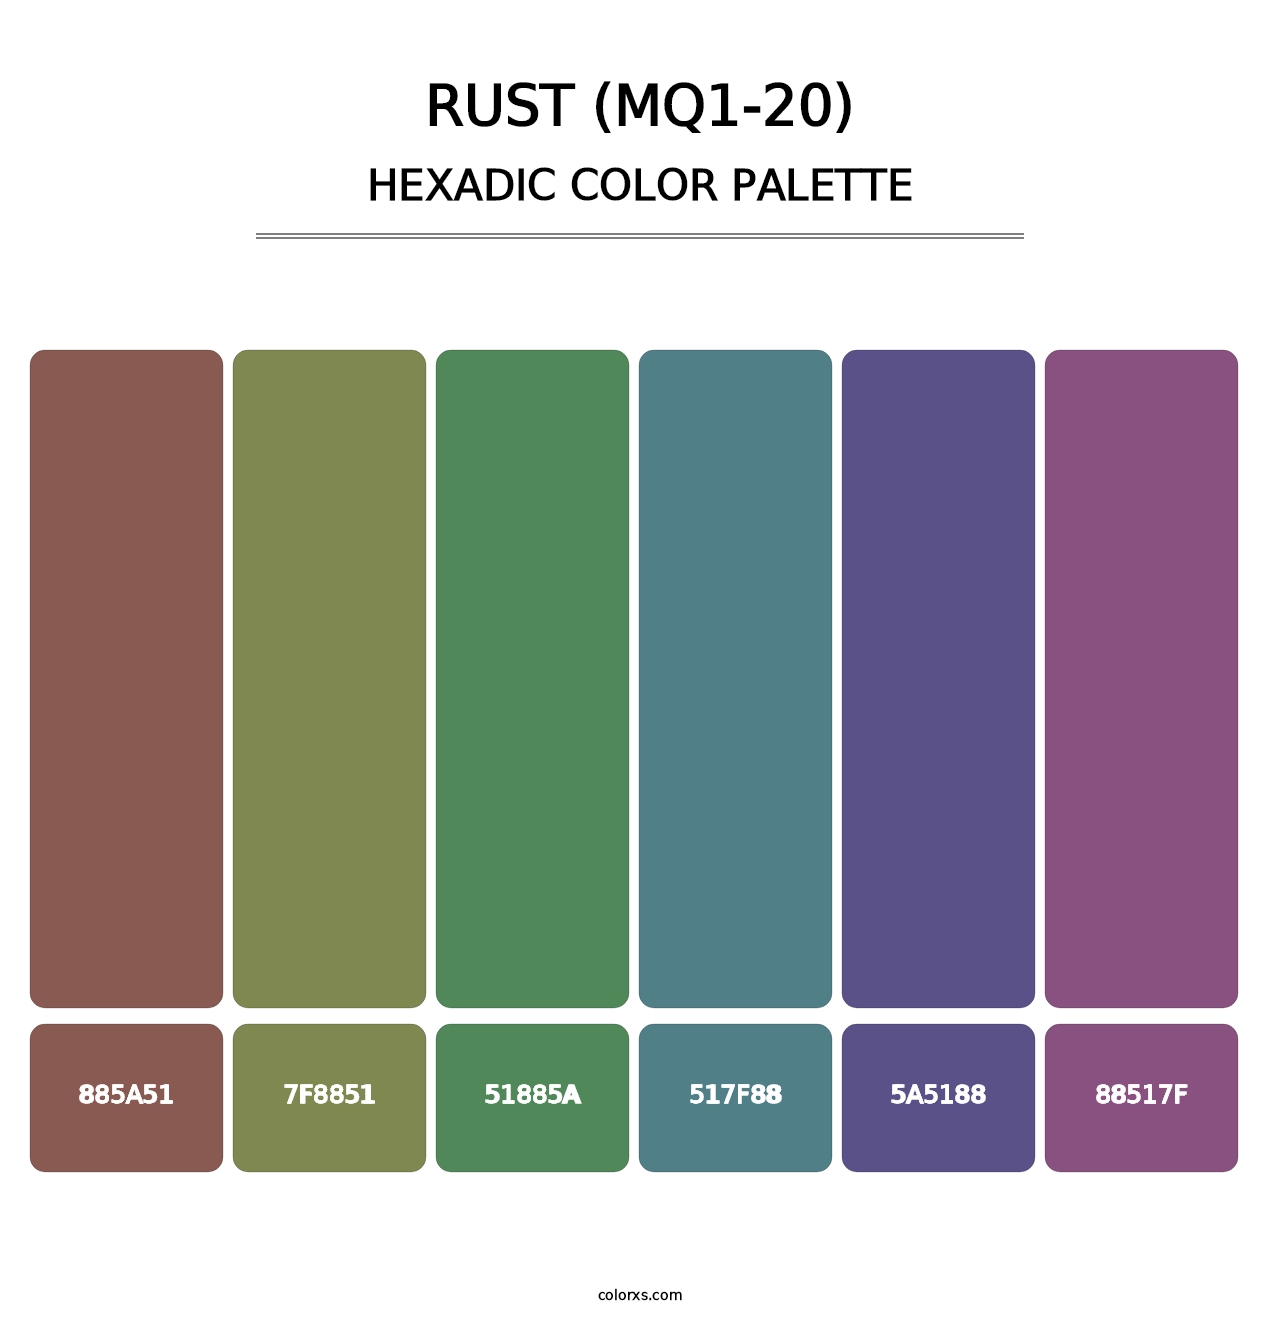 Rust (MQ1-20) - Hexadic Color Palette